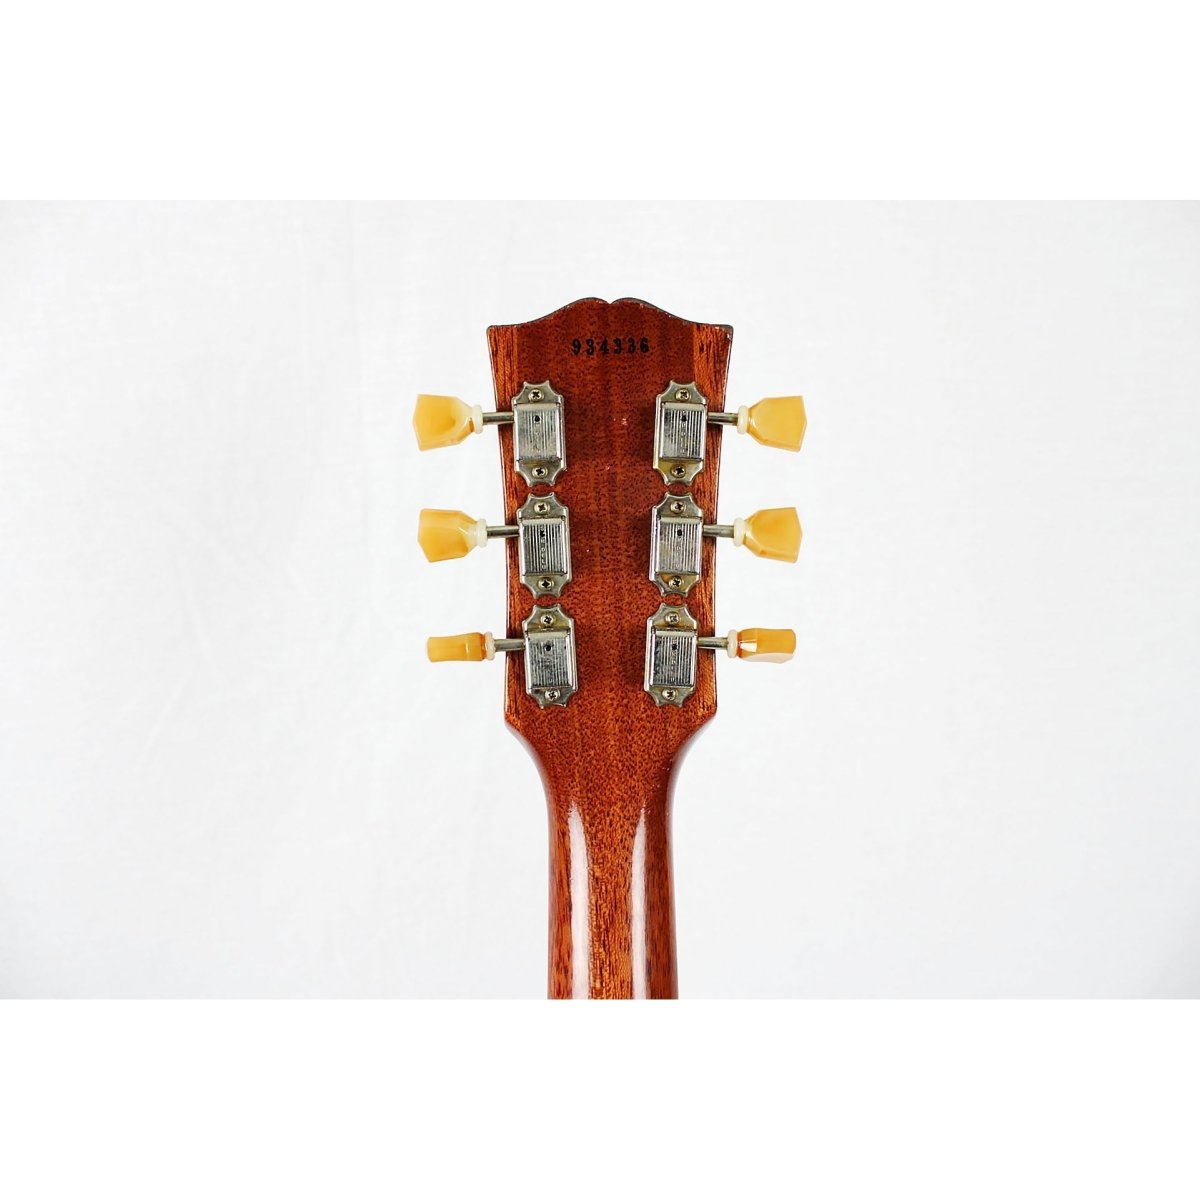 Gibson Custom 1959 Les Paul Standard Reissue - Murphy Lab Heavy Aged Green Lemon Fade - Leitz Music-711106050393-LPR59HAGLFNH1